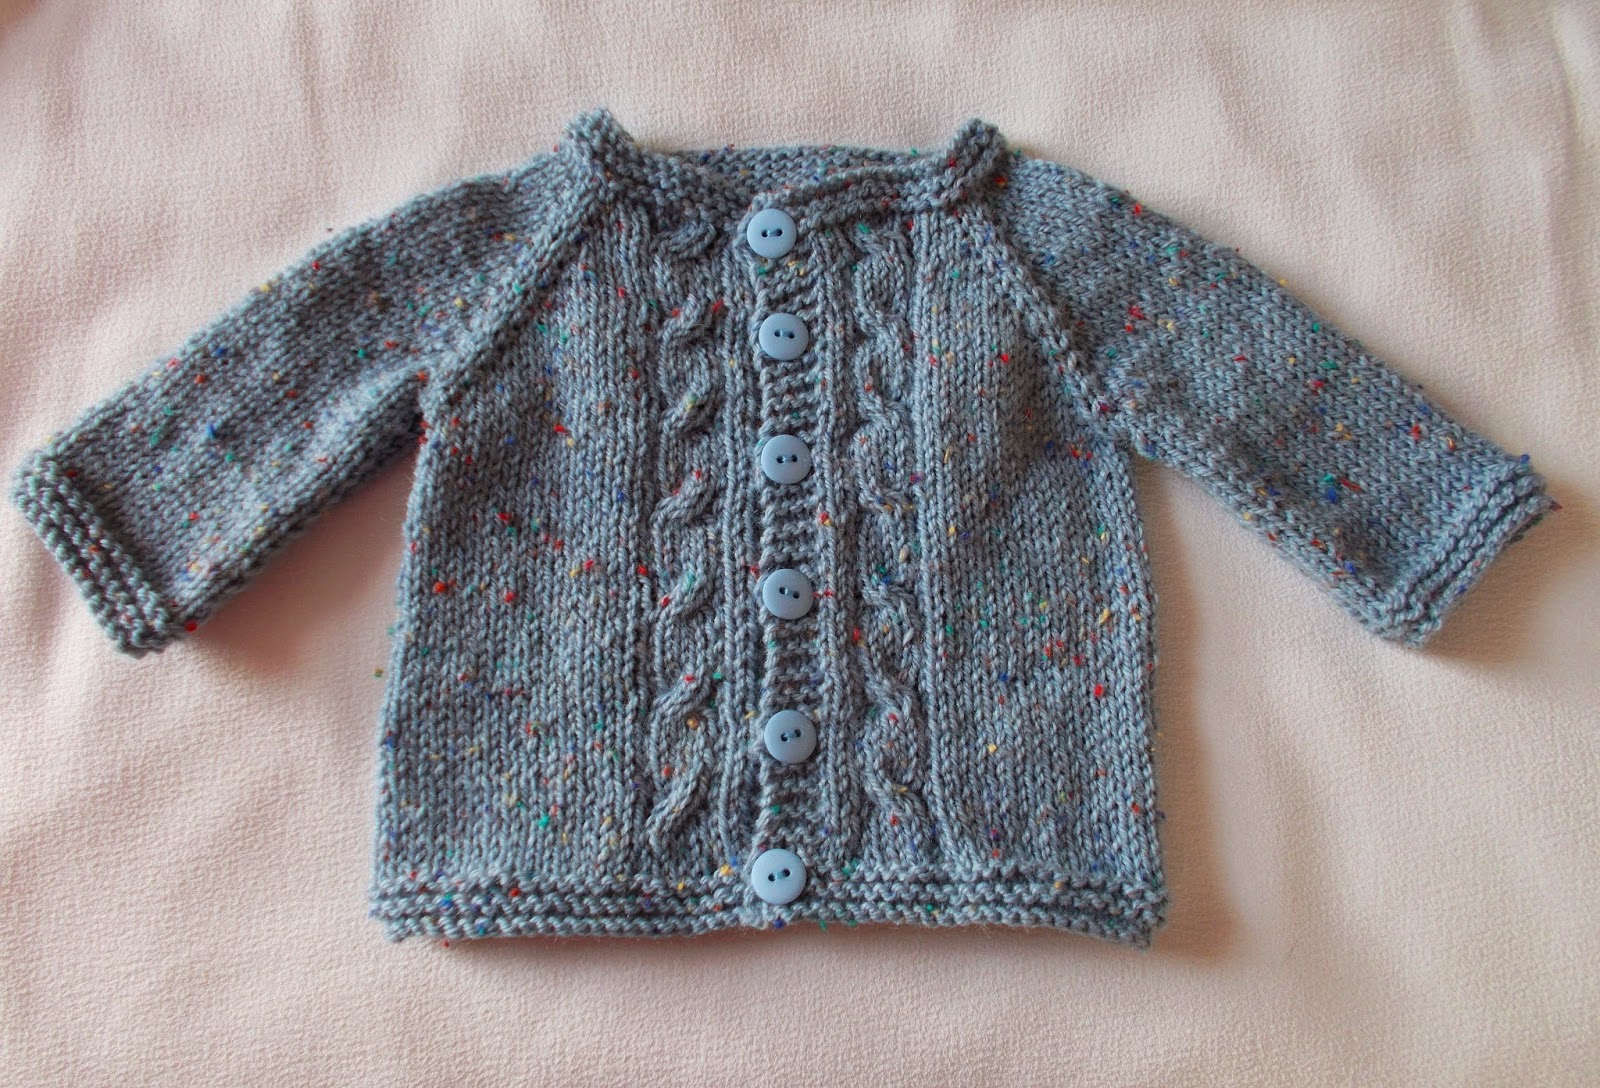 4 ply baby knitting patterns free nz